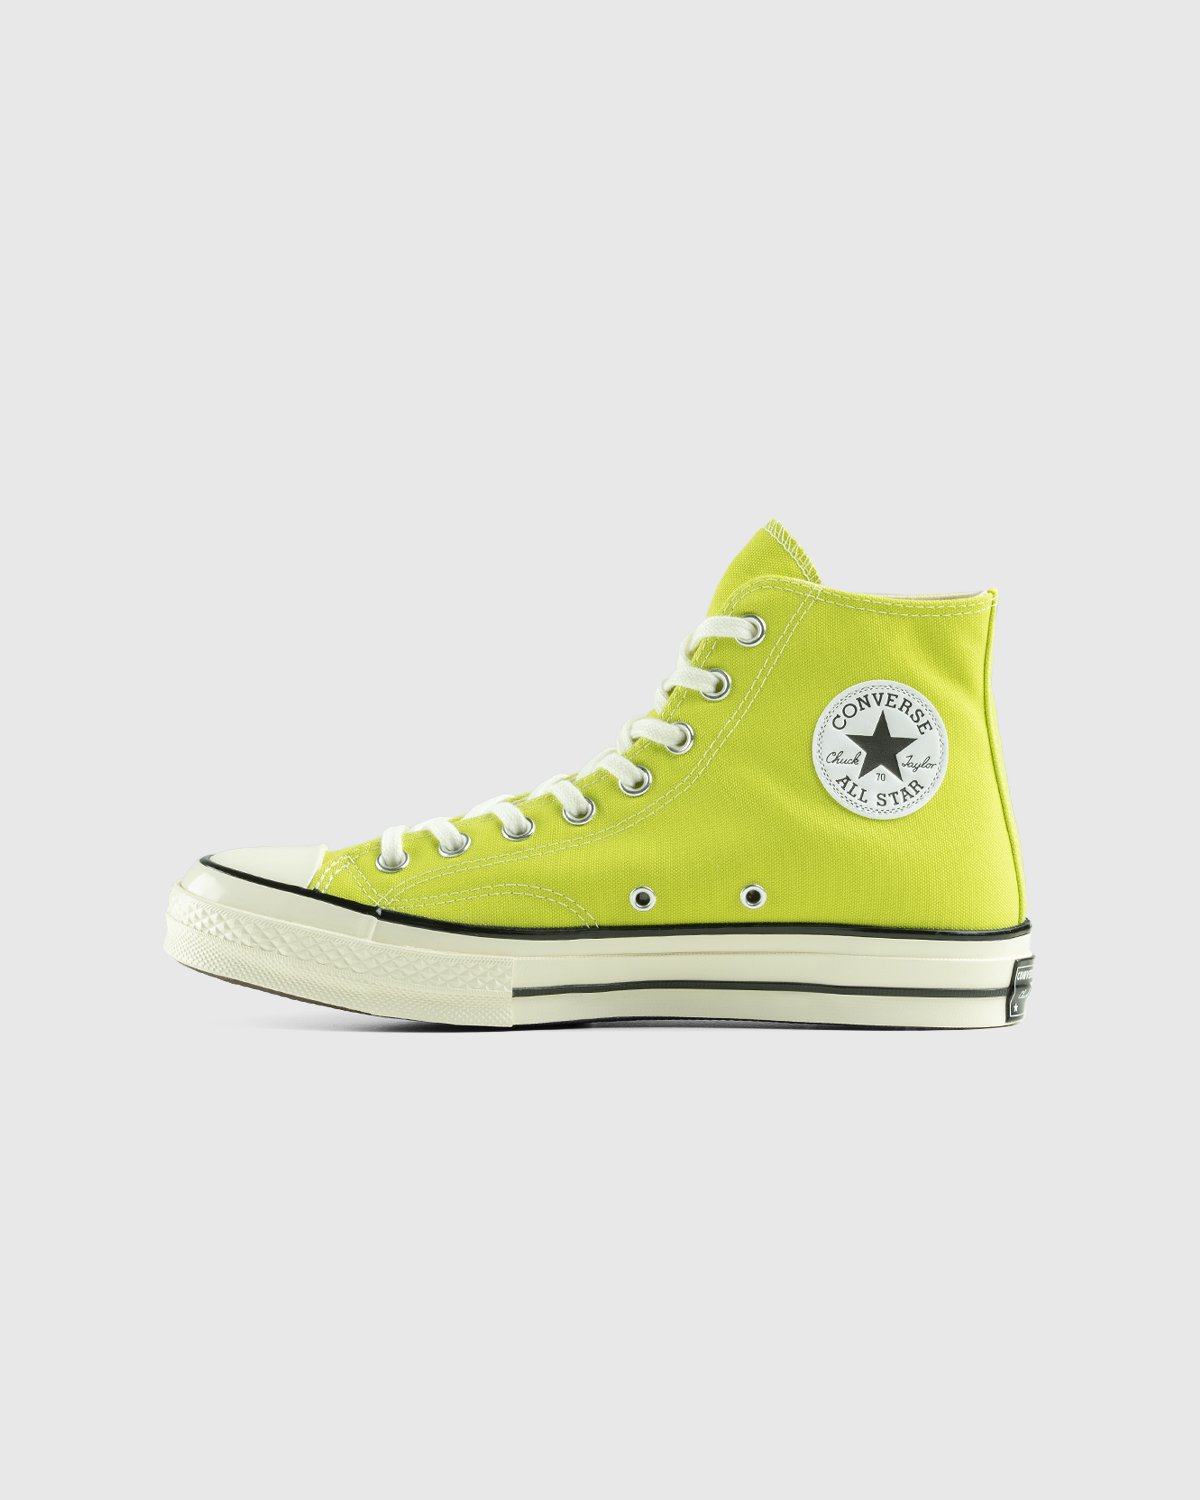 Converse - Chuck 70 Lime Twist Egret Black - Footwear - Yellow - Image 2